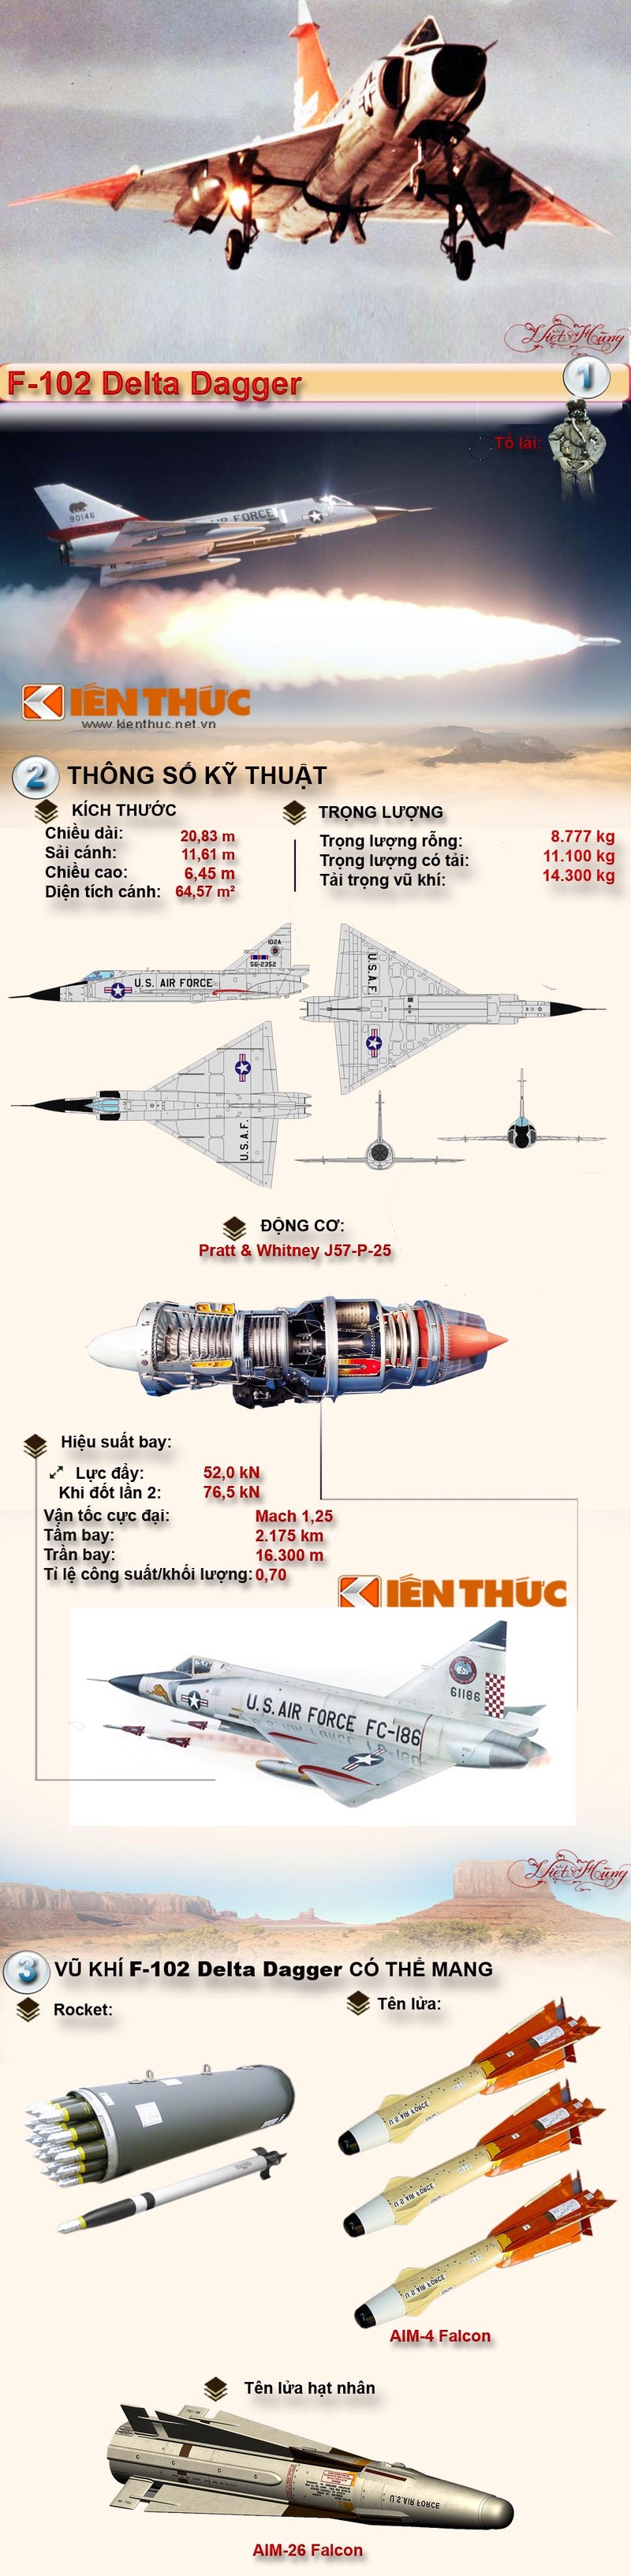 Infographic: Dong chien dau co the ky bai tran o Viet Nam (3)